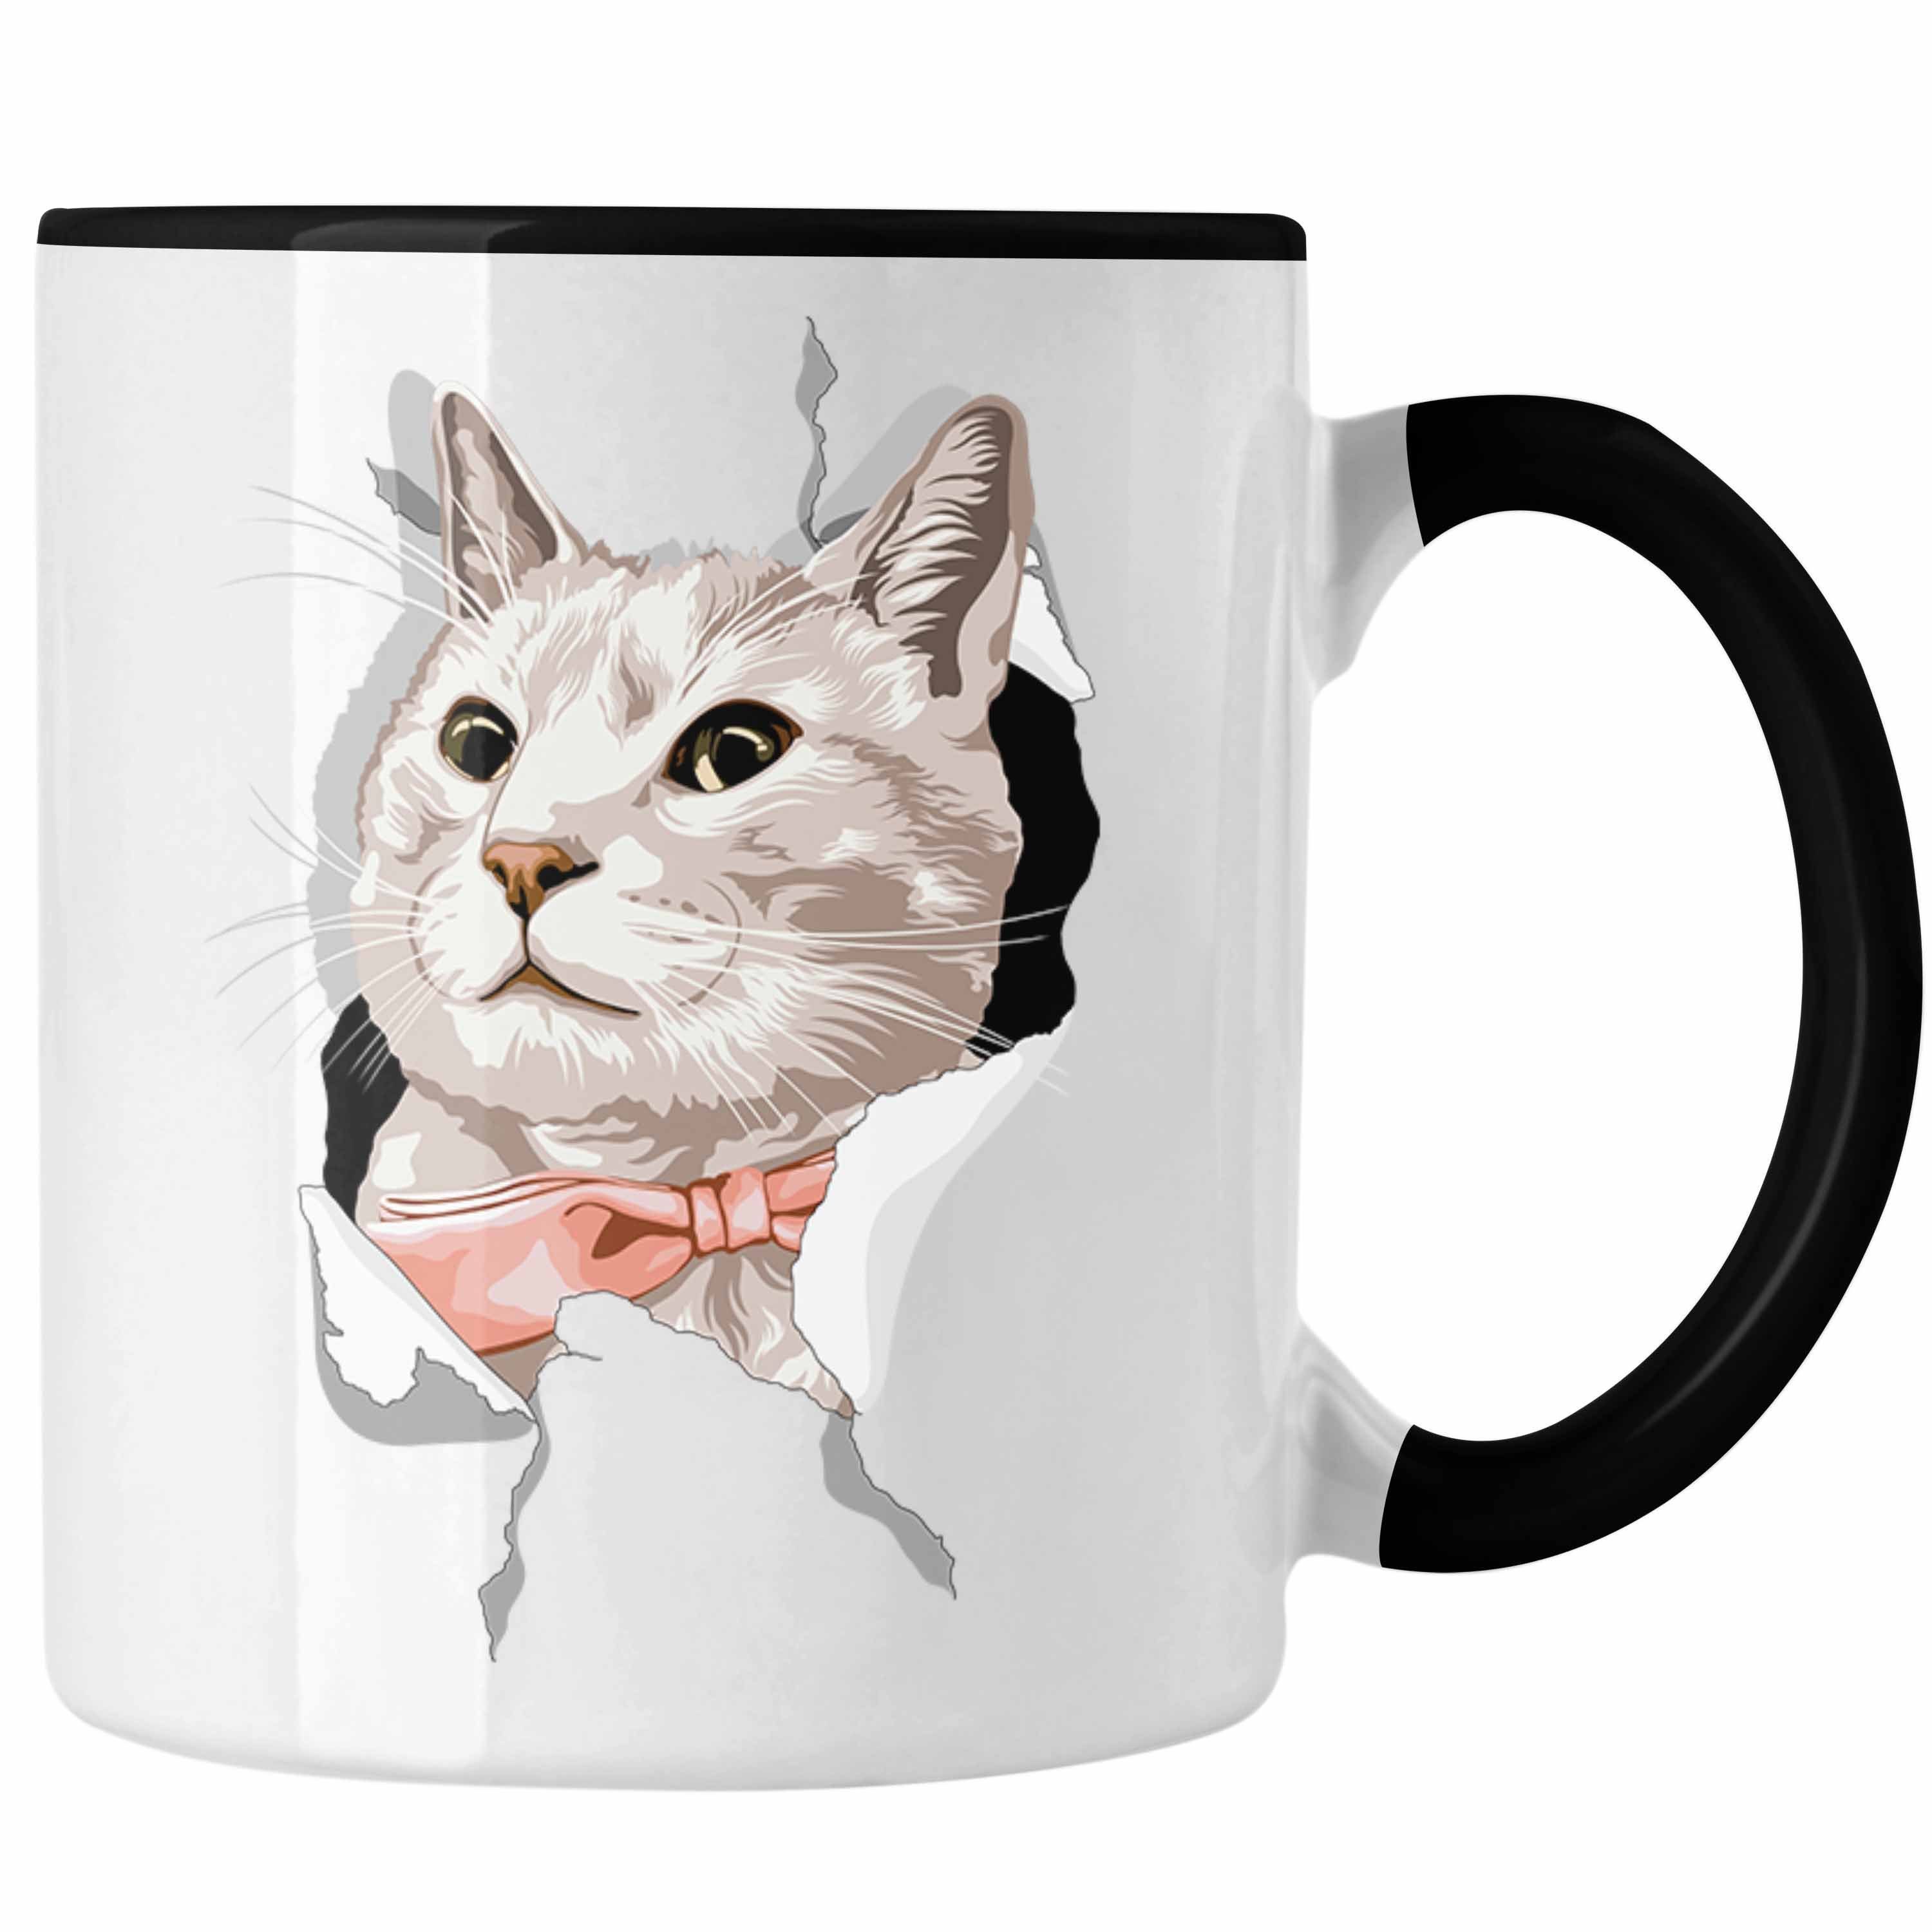 Trendation Tasse Trendation - Lustige Katzen Katzenbesitzerin Tasse Katzengrafik Geschenk Geschenkidee 3D Schwarz